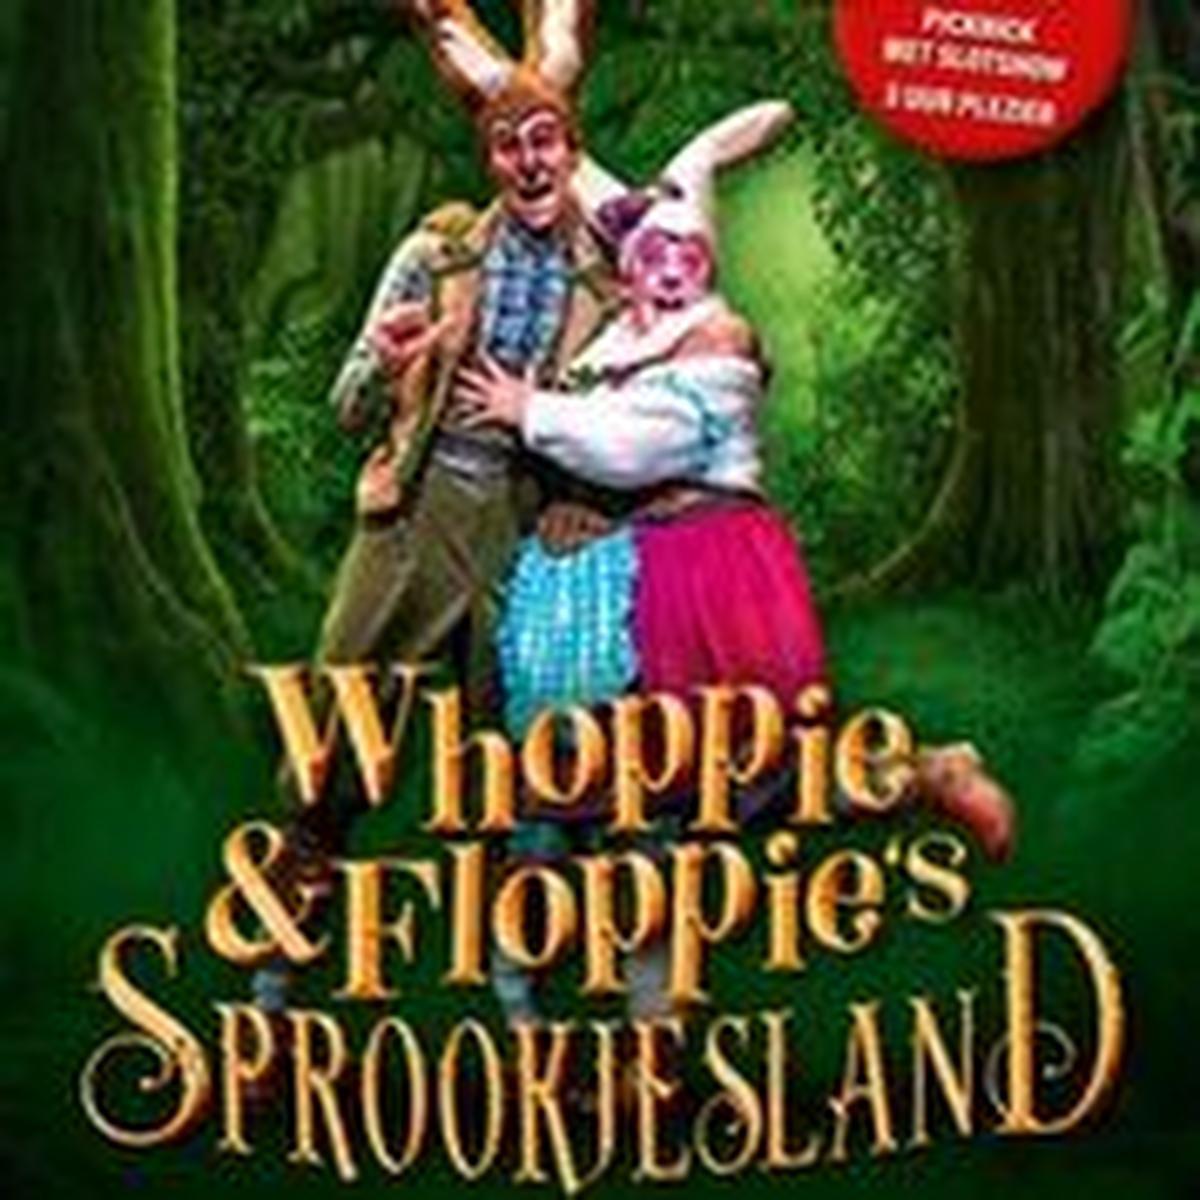 West-Vlaamse sprookjesboskonijnen brengen eerste eigen show in 'Whoppie en Floppie Sprookjesland'